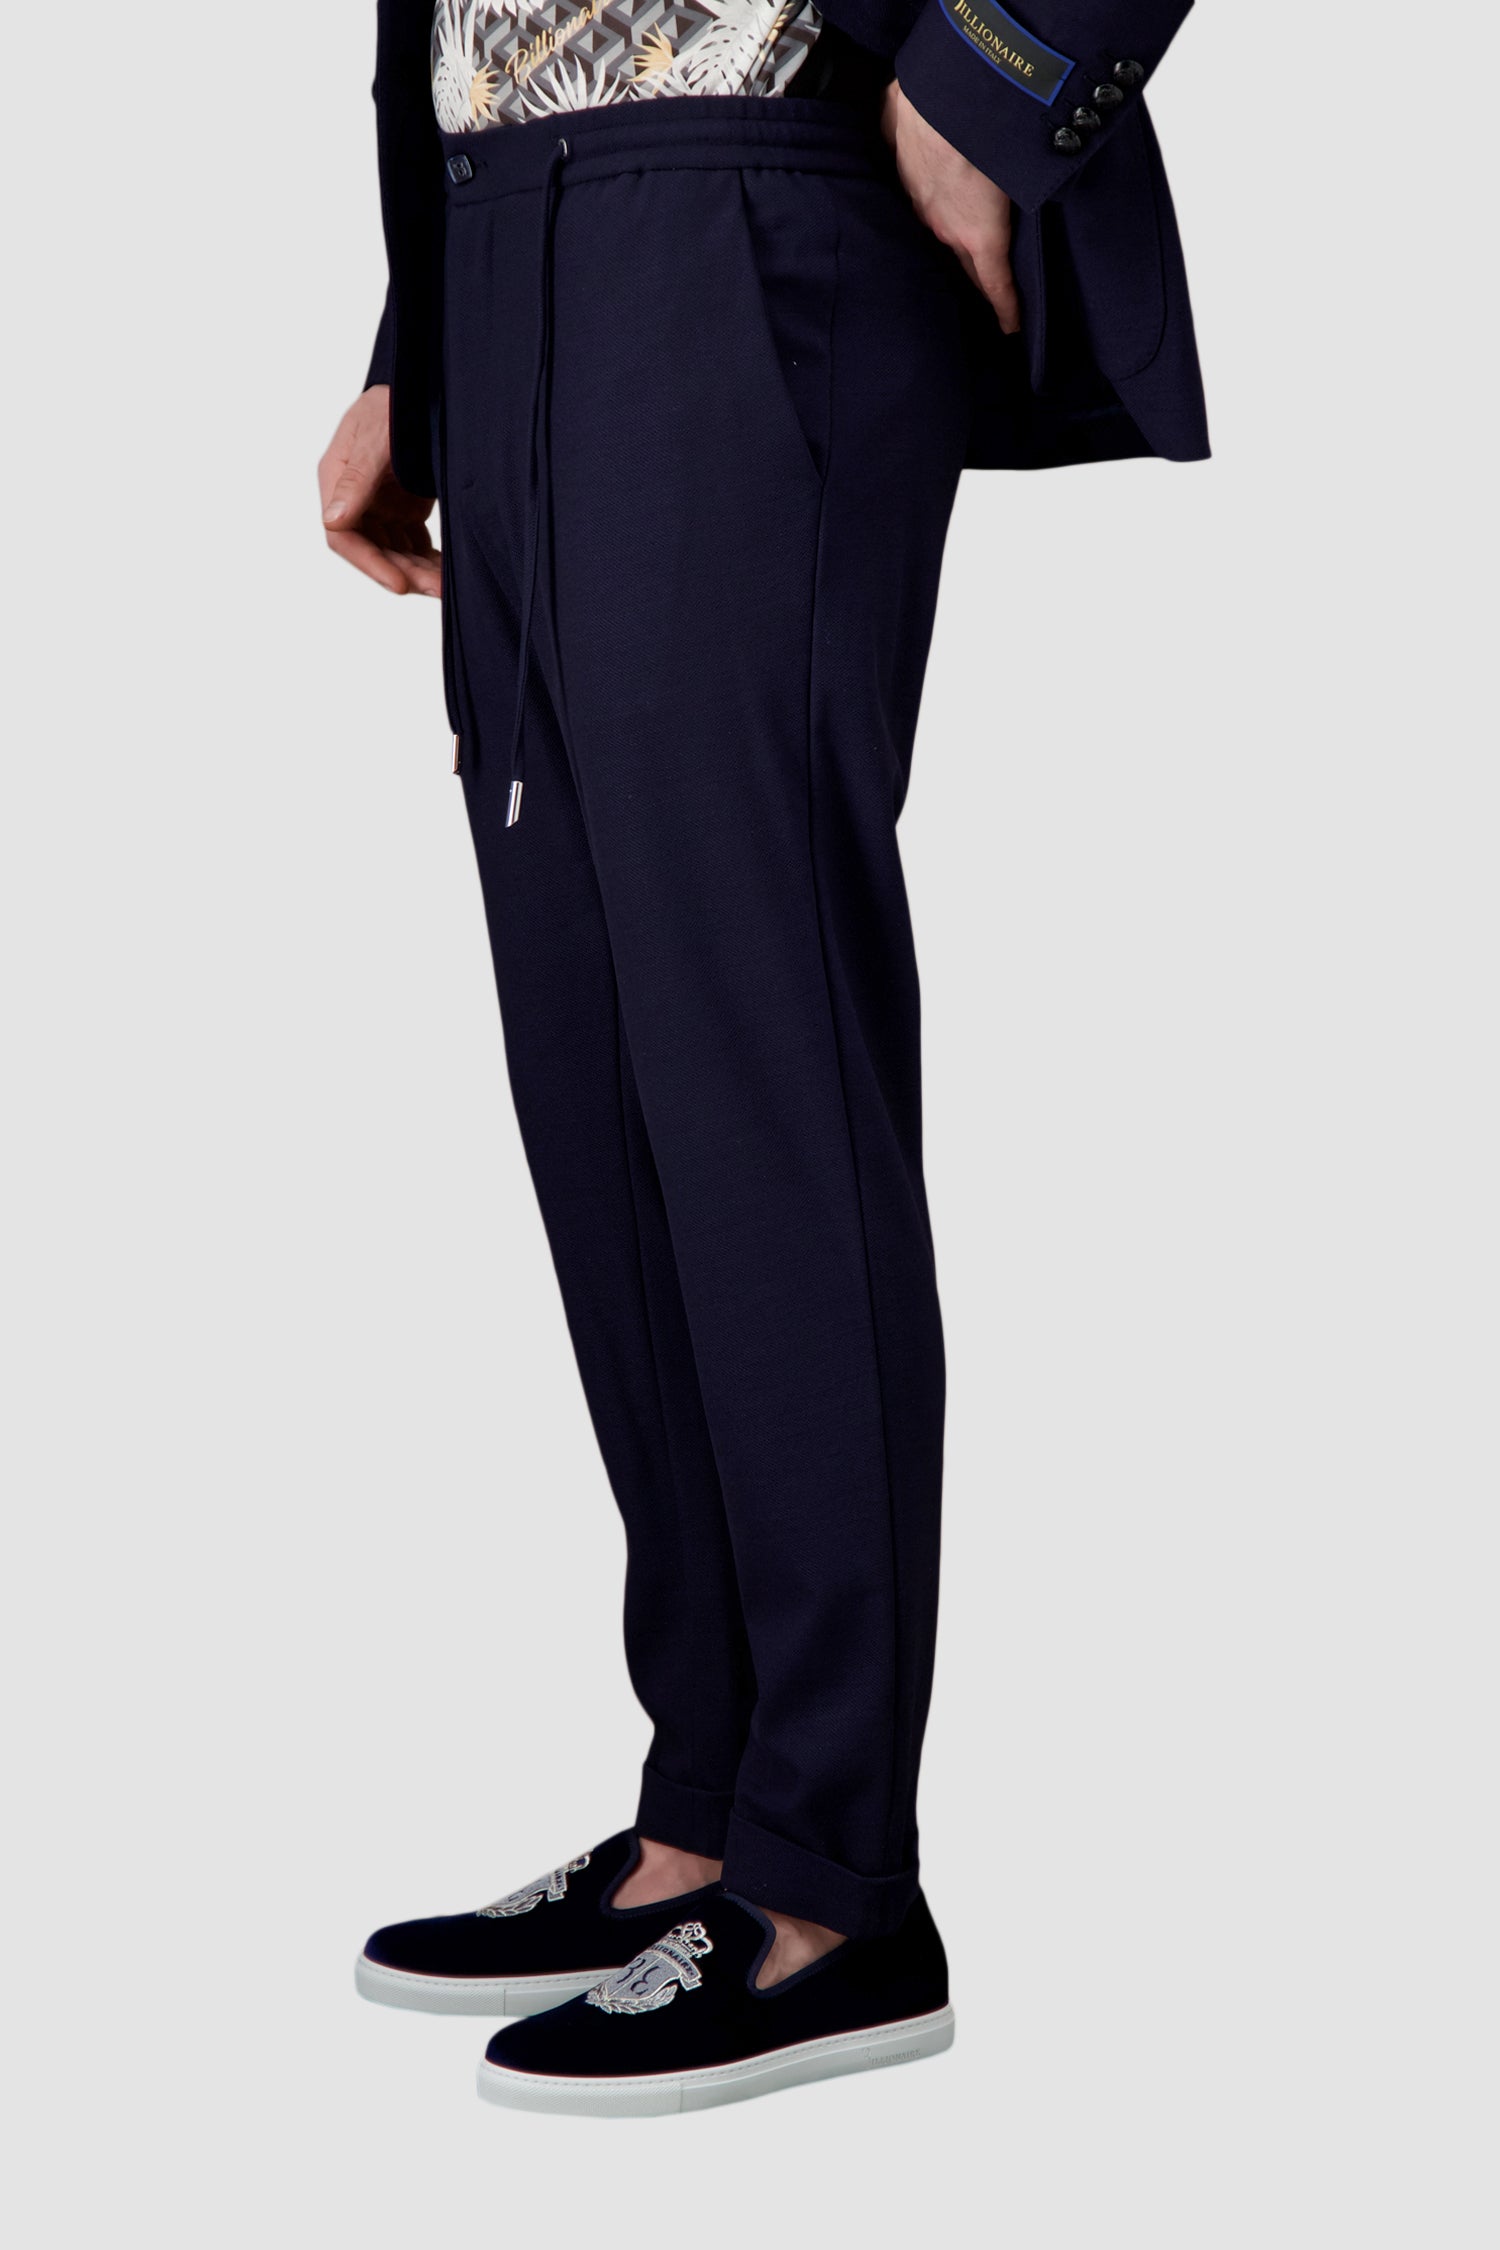 Billionaire Dark Blue Tailored Fit Crest Trousers